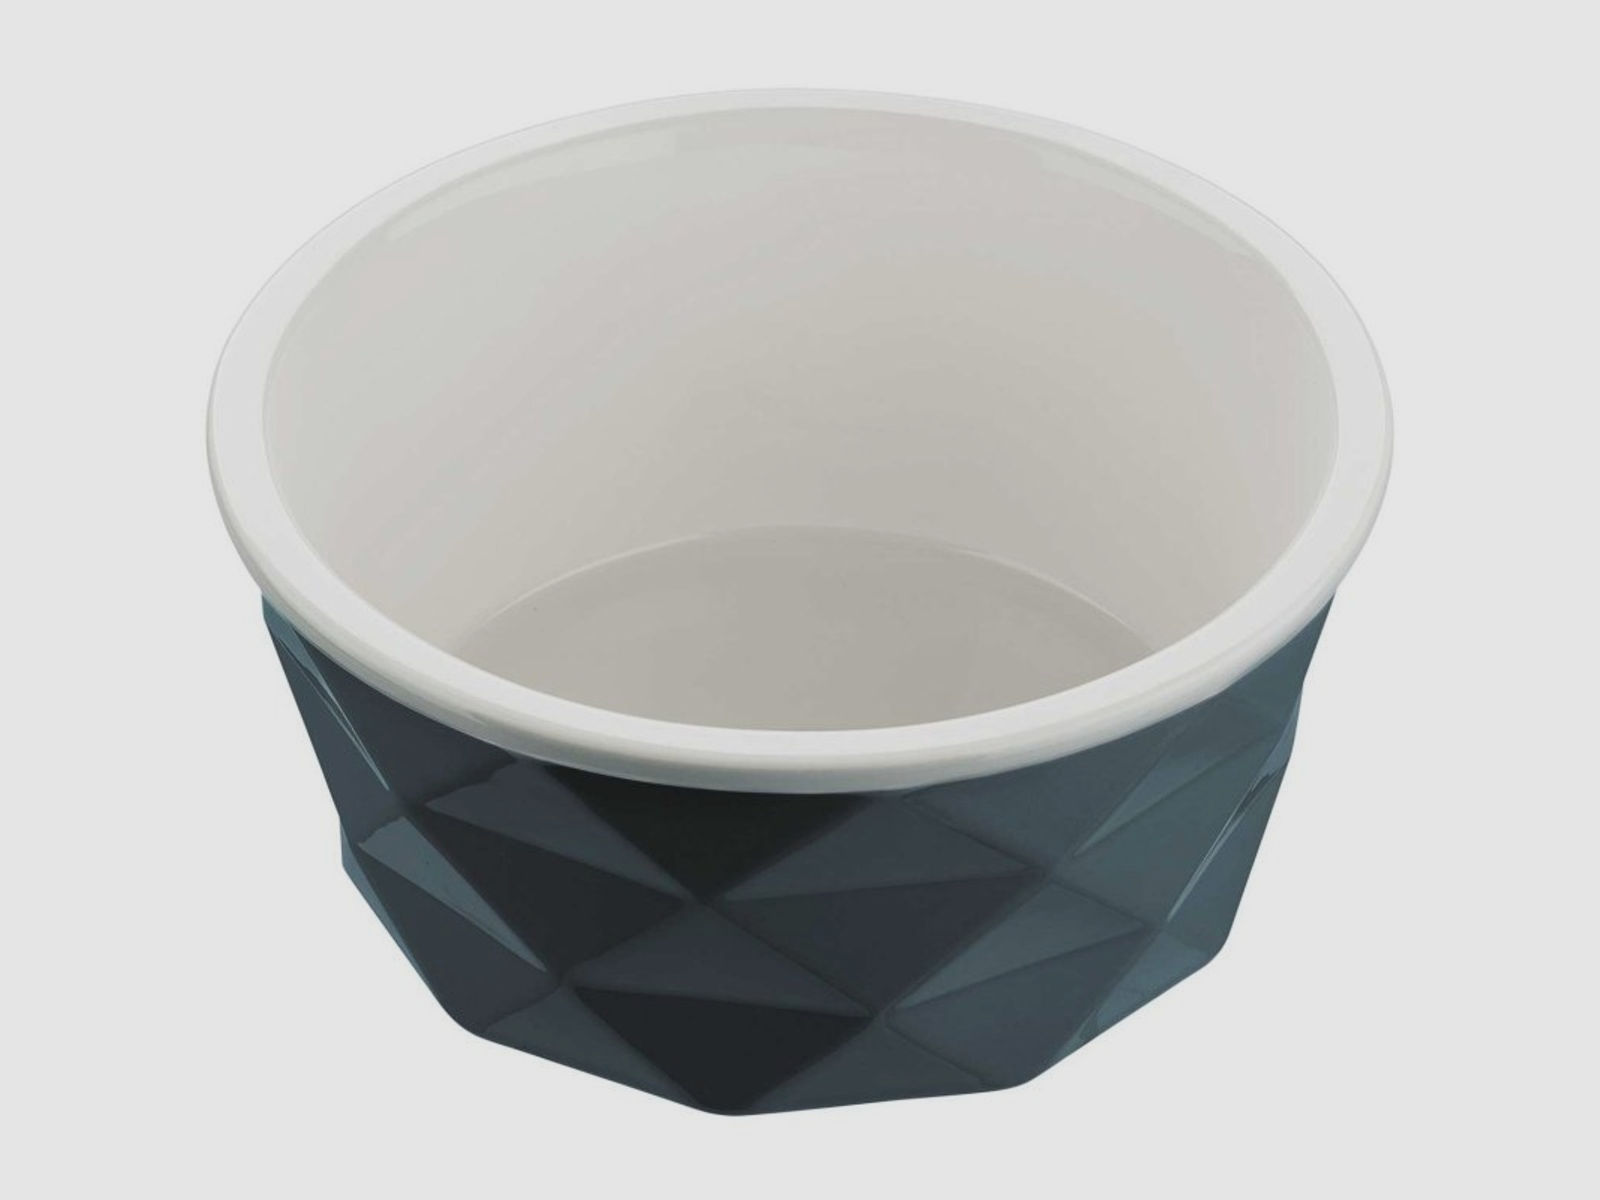 Hunter Keramik-Napf Eiby Dunkelblau 1100 ml